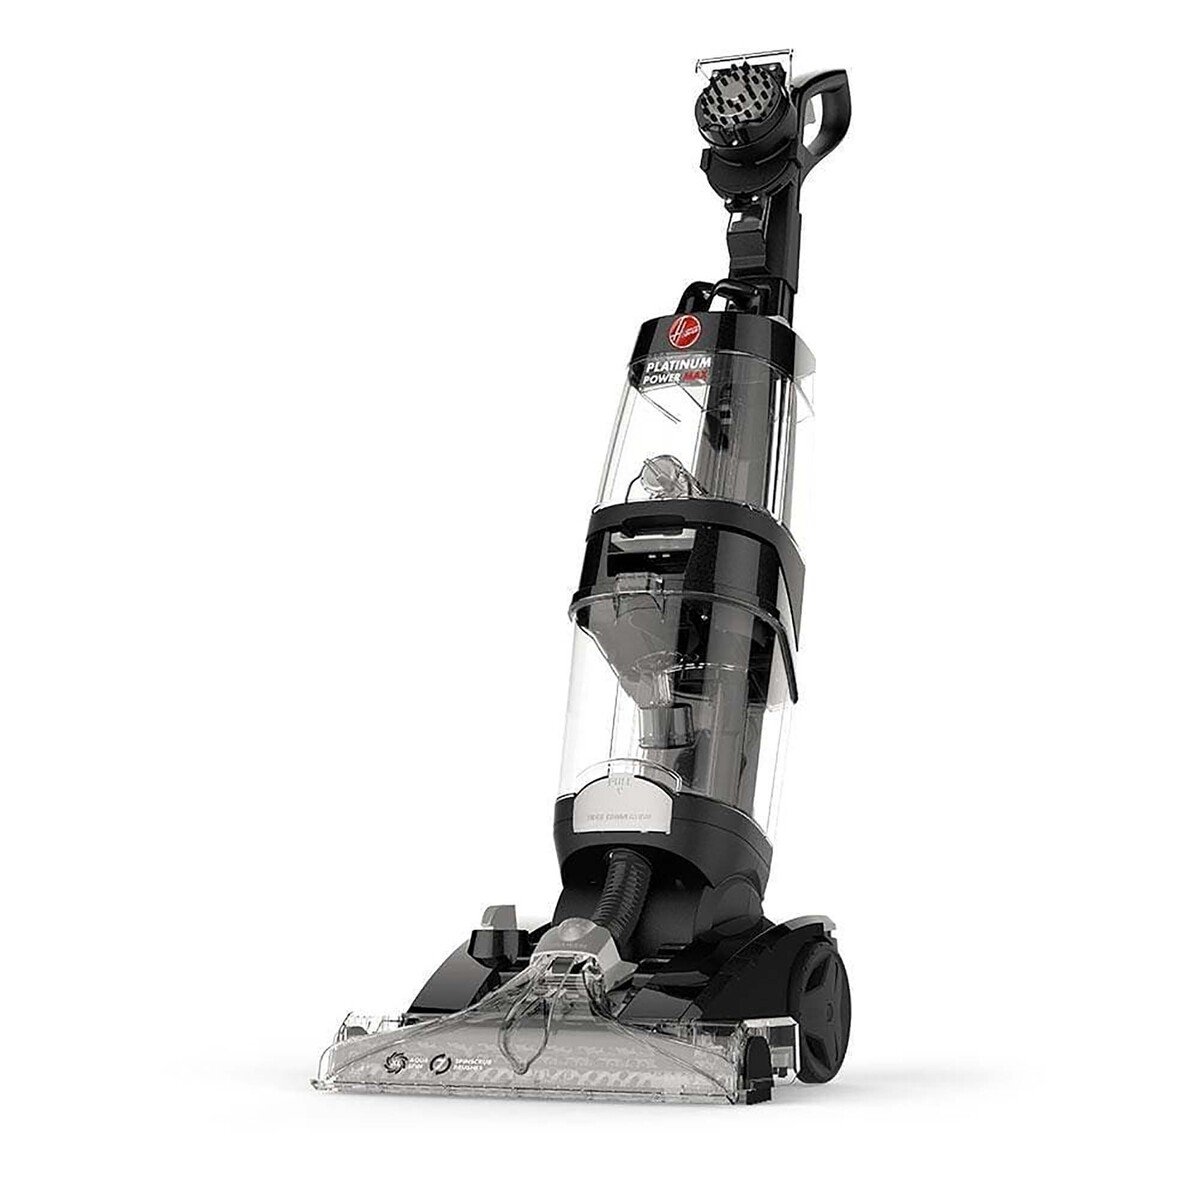 Hoover Gator Cordless Handheld Vacuum Cleaner HQ86-GABM 10.8v Online at  Best Price, Hand Vacuum Cleaners